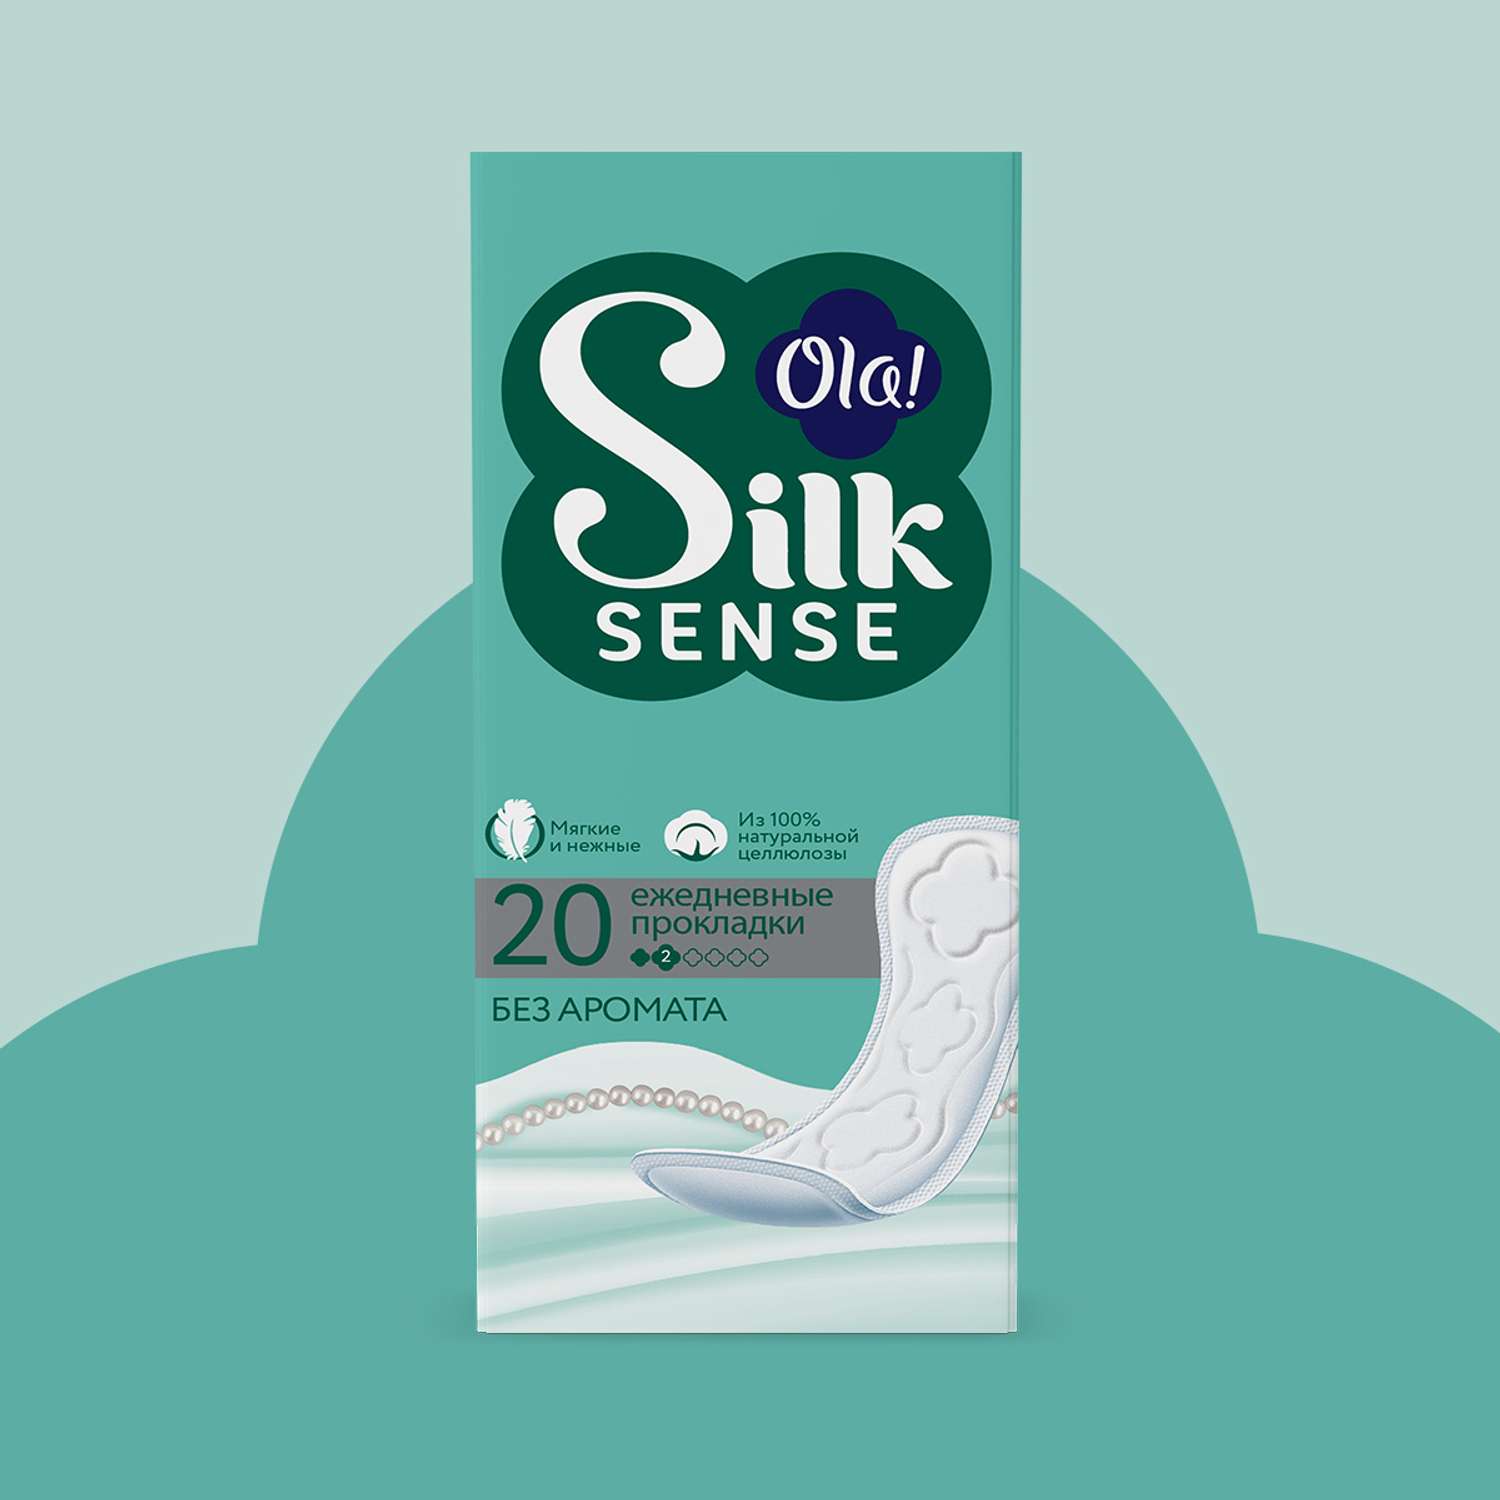 Ежедневные прокладки Ola! Silk Sense мягкие без аромата 20 шт - фото 1